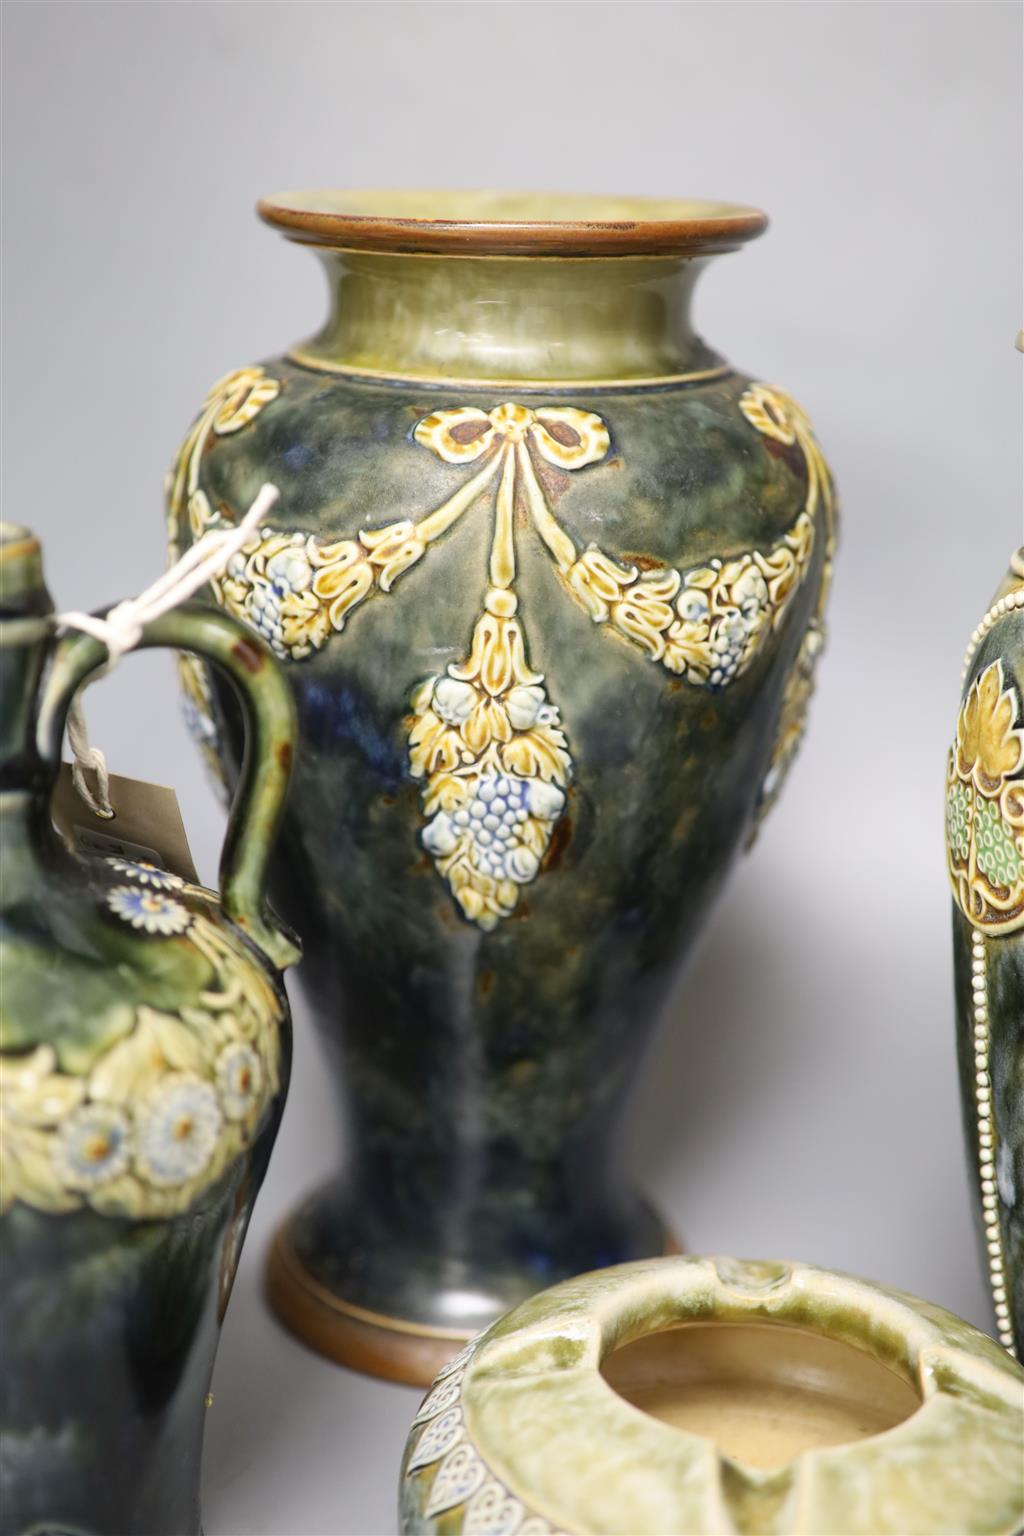 A pair of Royal Doulton vases, a similar larger vase and a small flagon